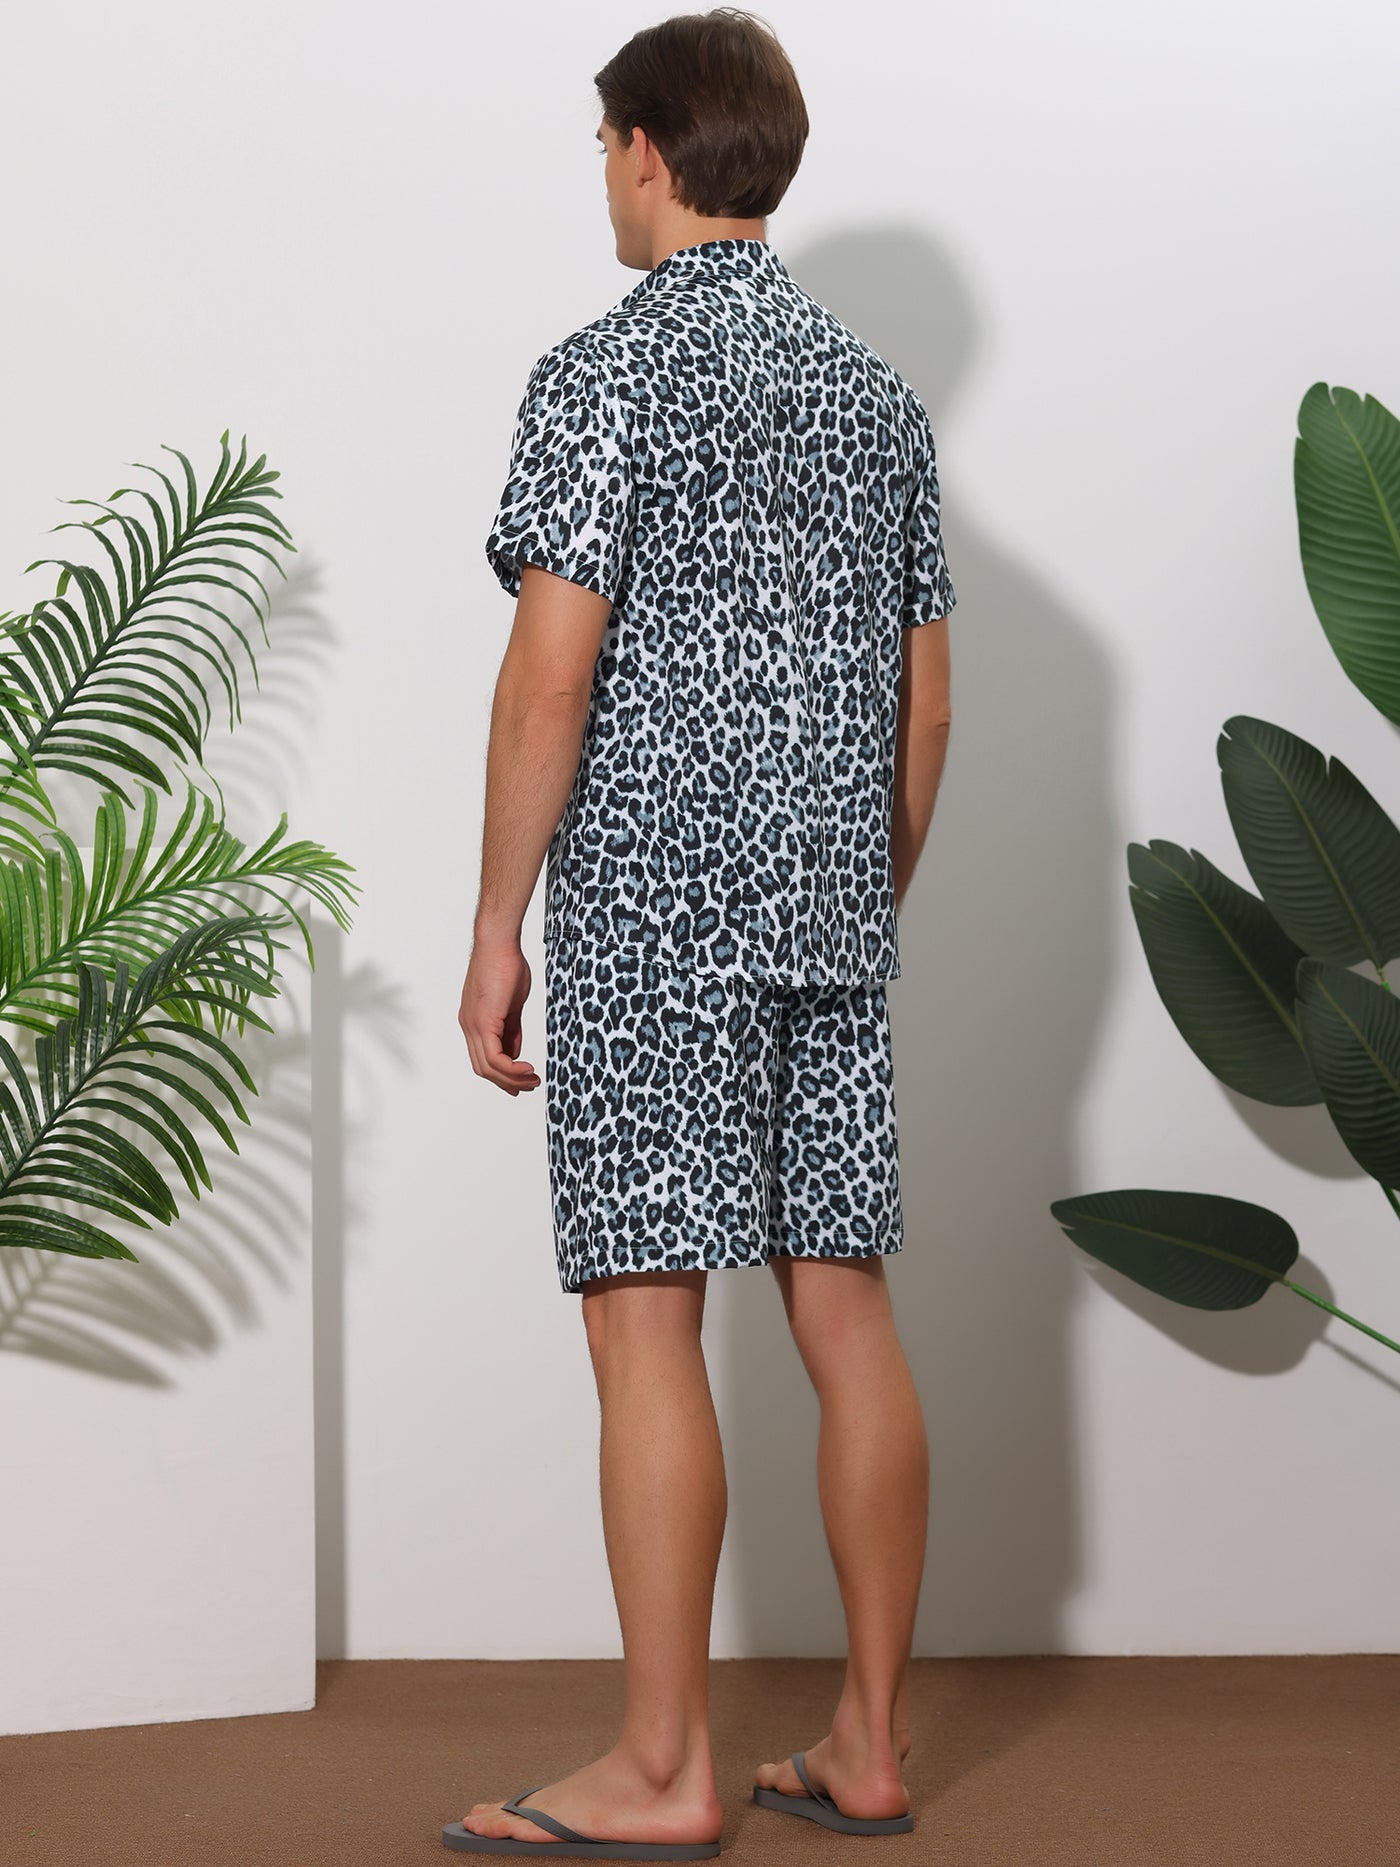 Bublédon Animal Patterned Summer Regular Fit Flat Front Print Shorts